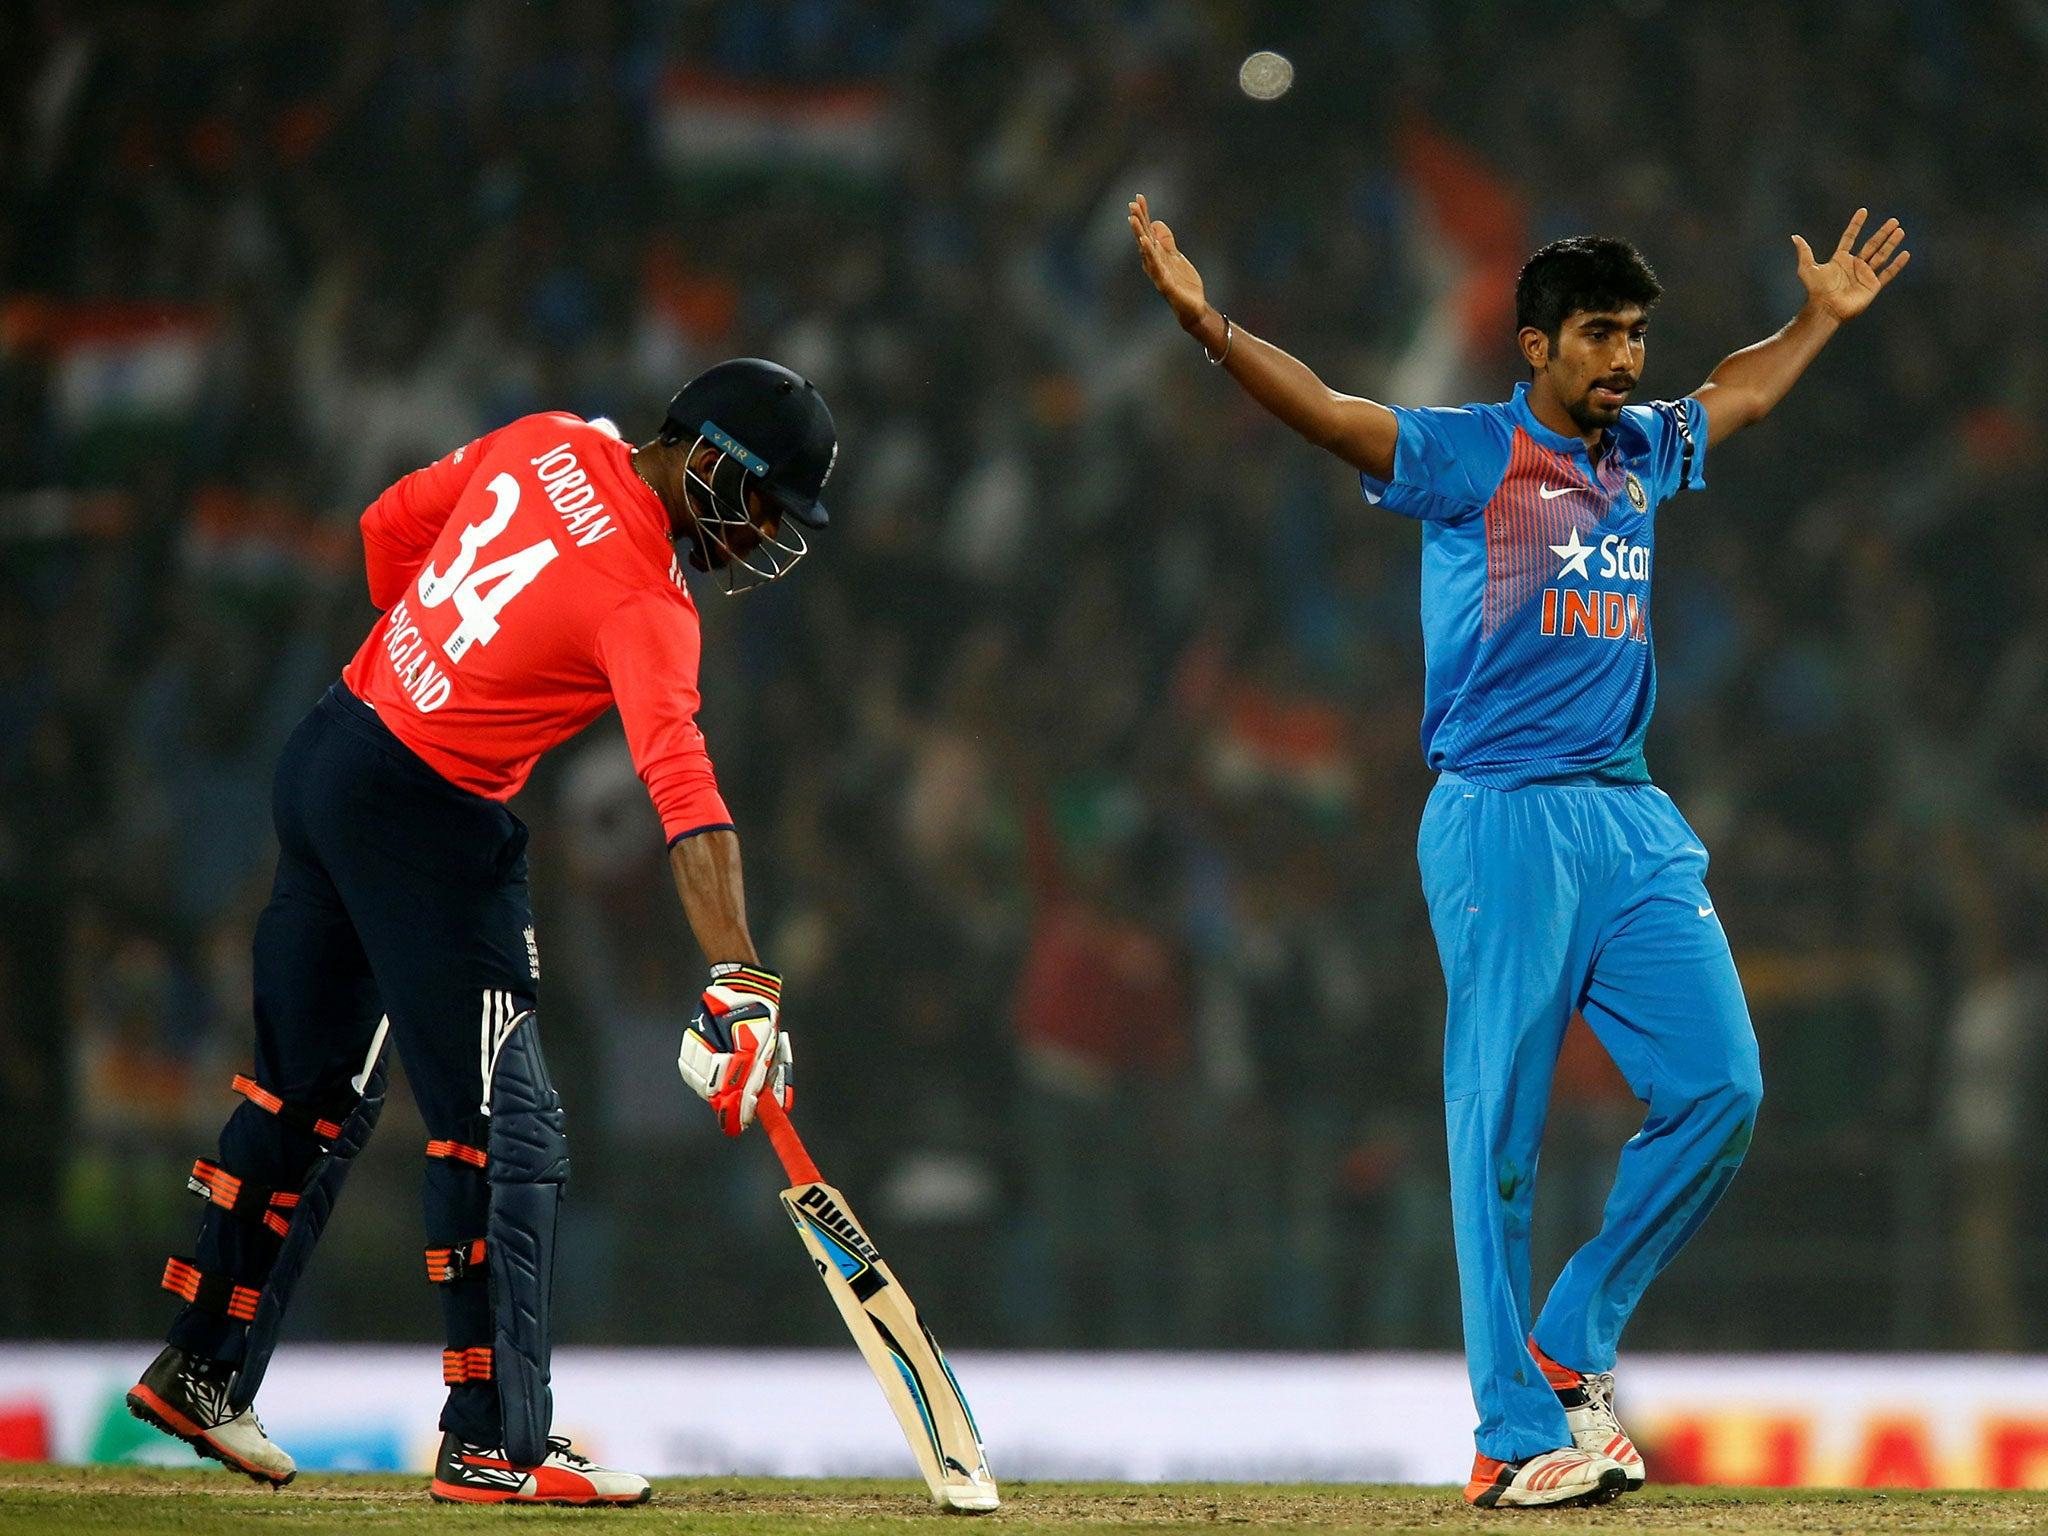 Jasprit Bumrah denies England at the death as India level Twenty20